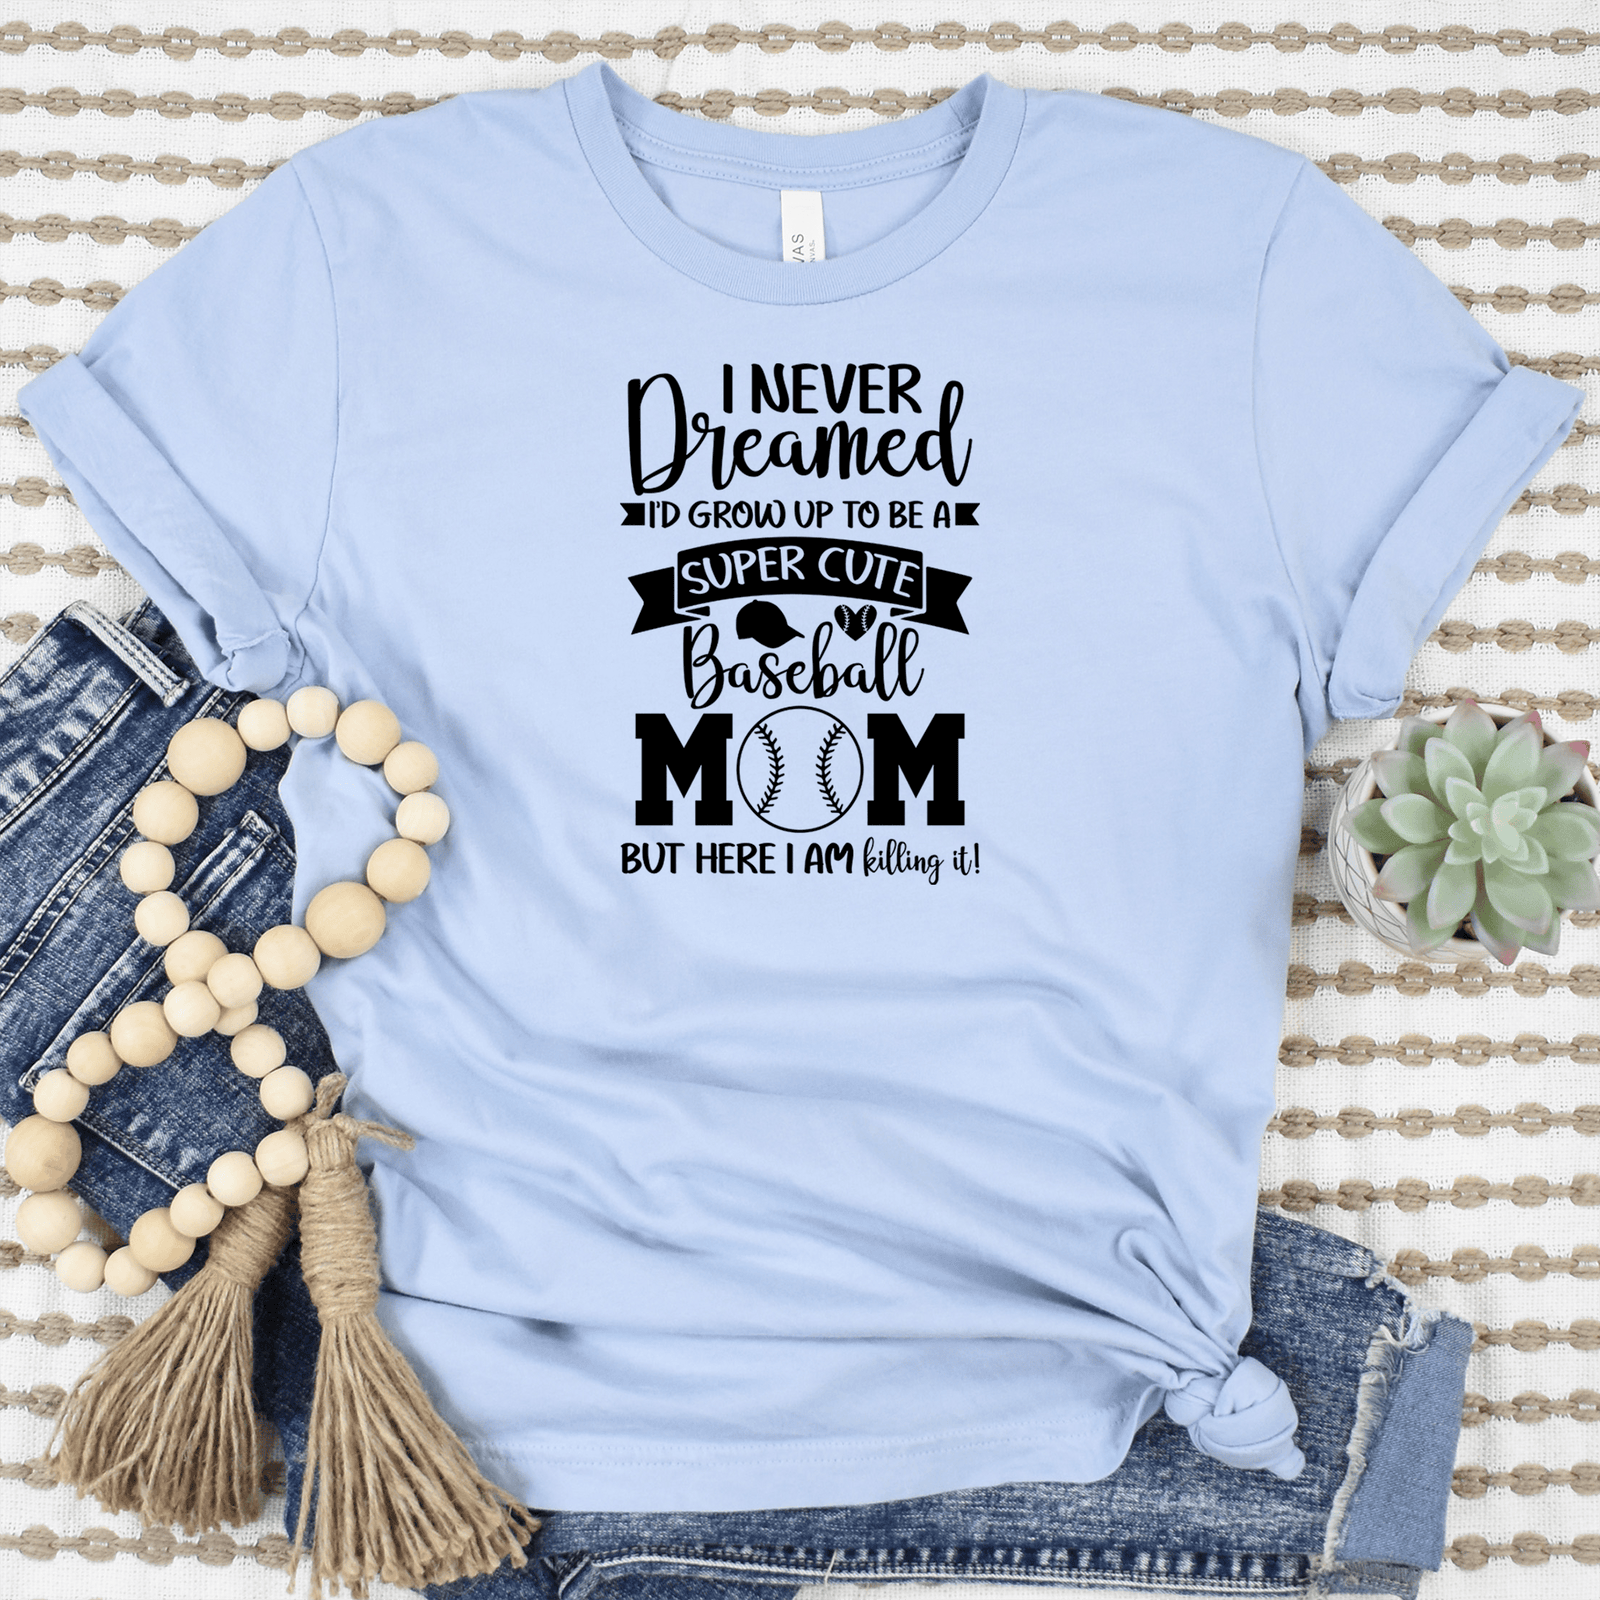 Womens Light Blue T Shirt with Super-Cute-Baseball-Mom design